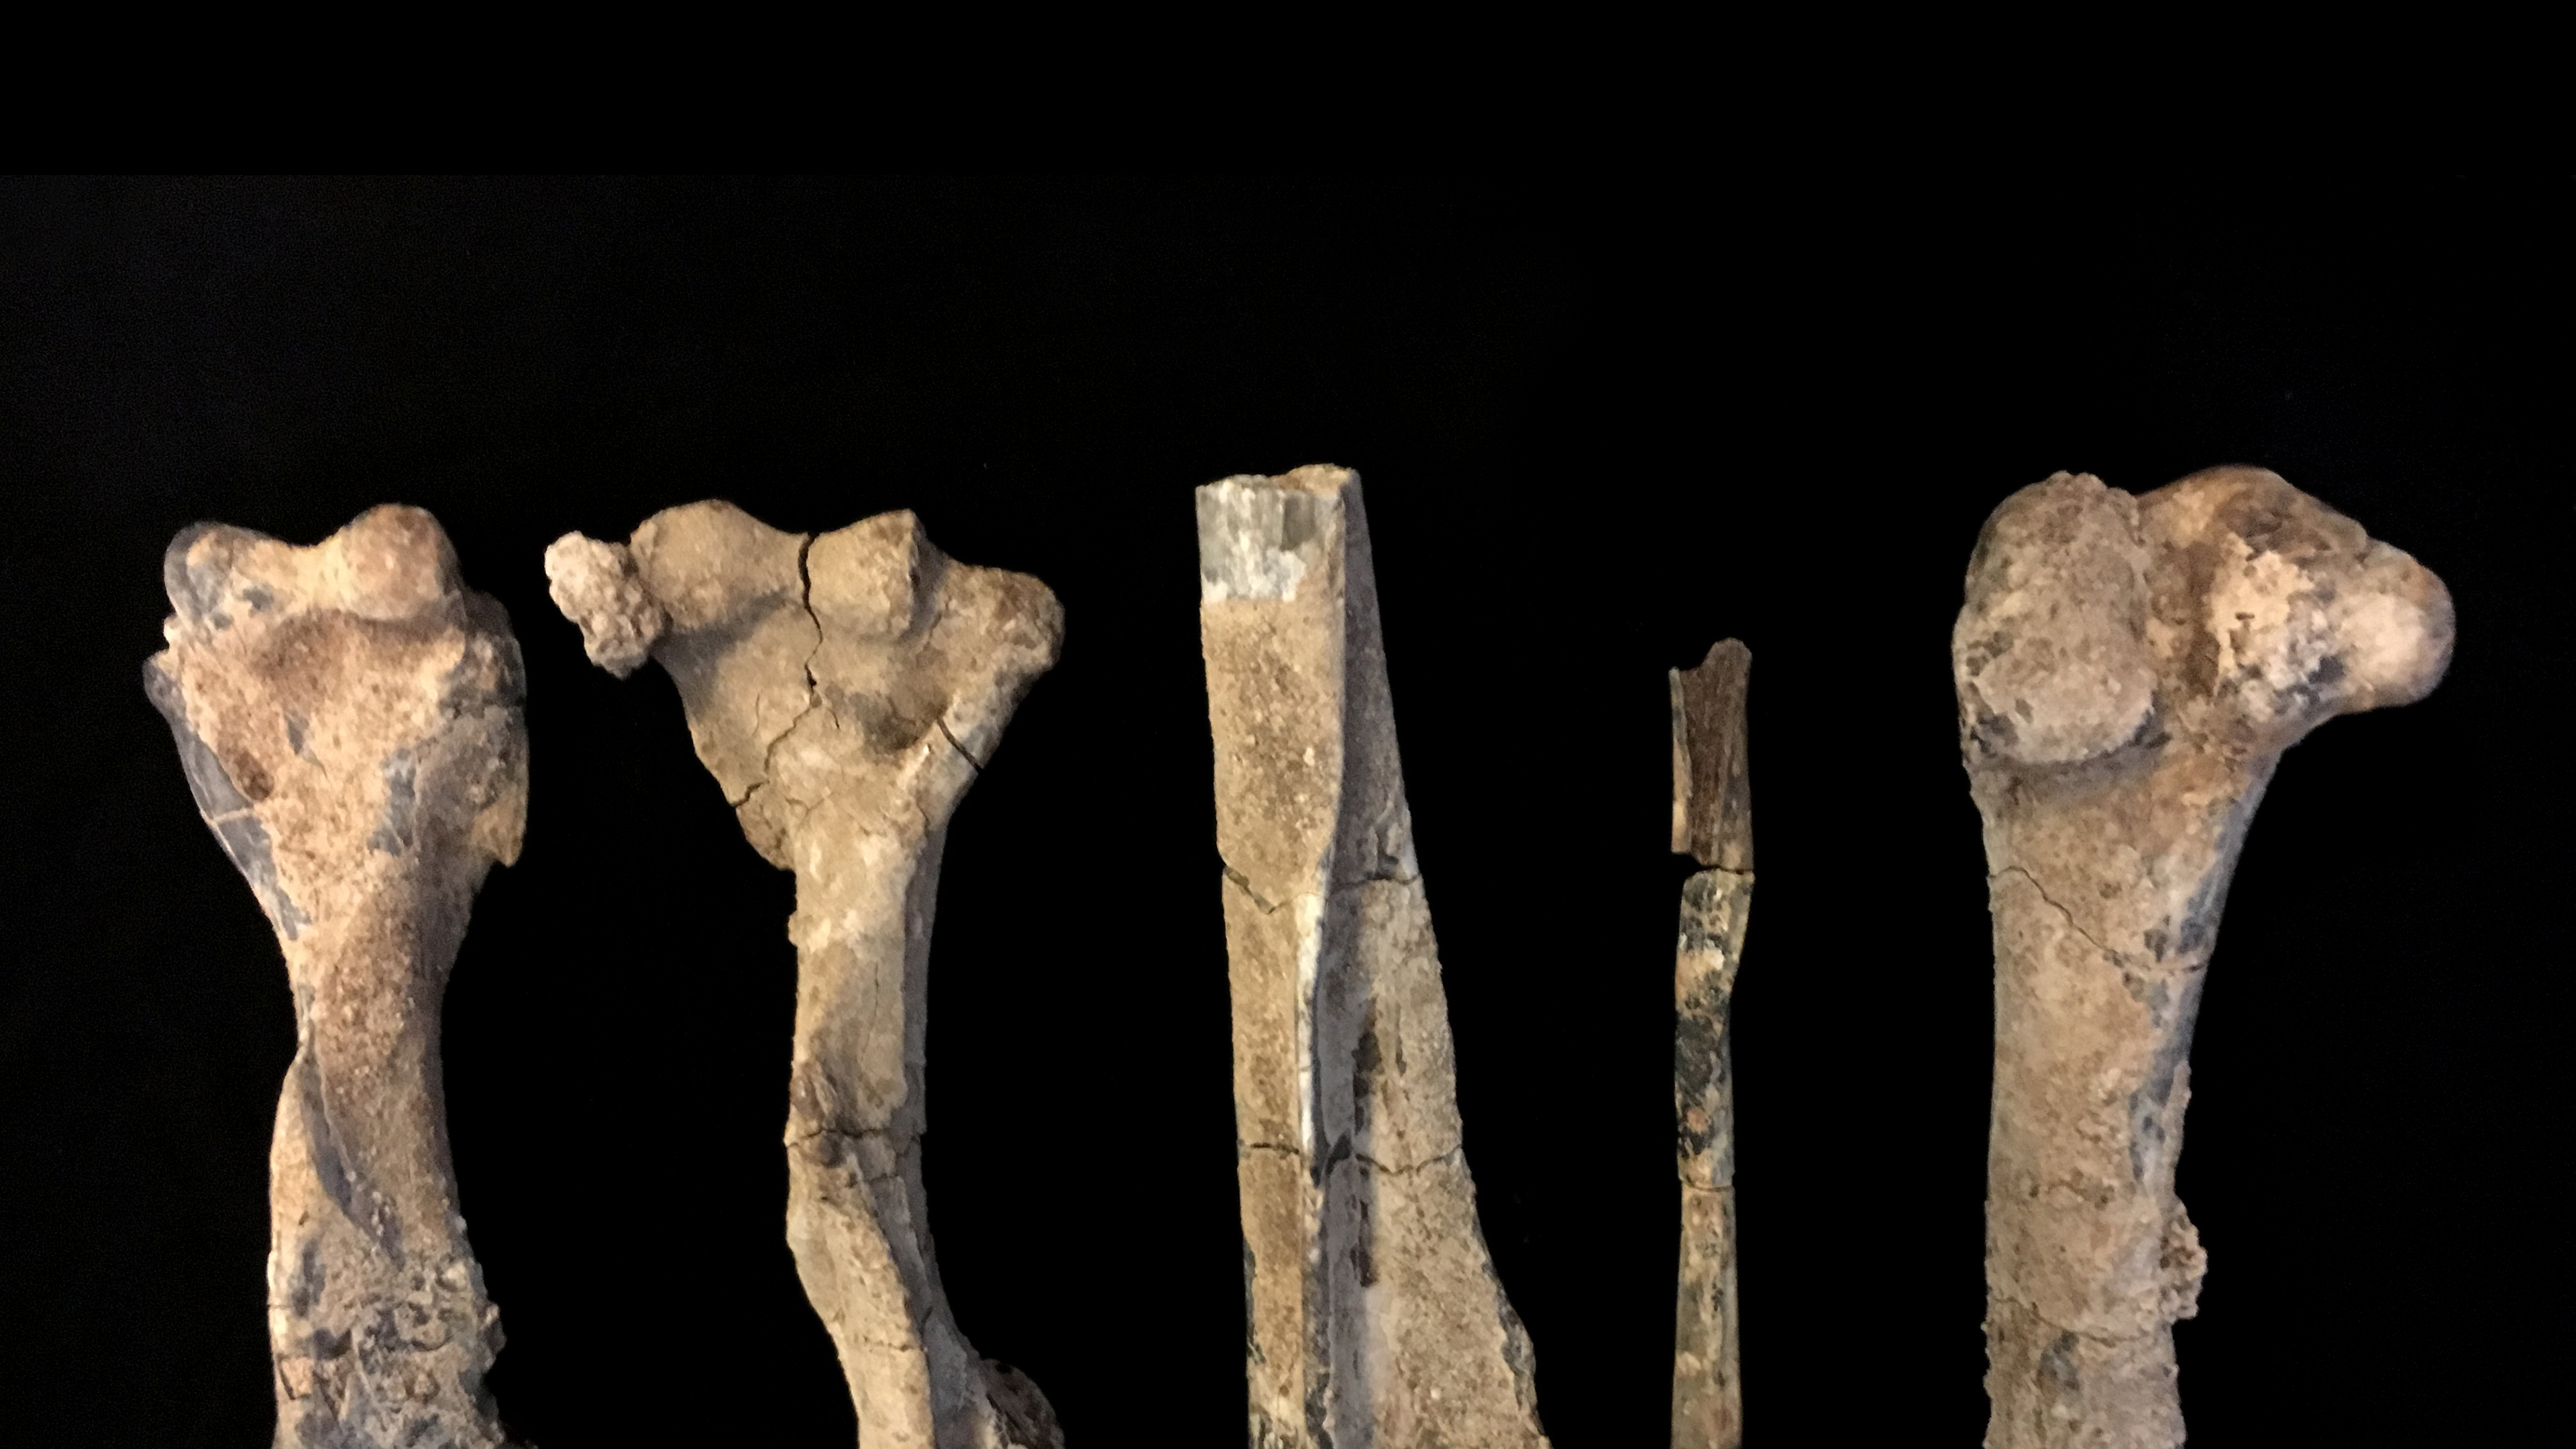 Top half of five fossilised bones on a black background